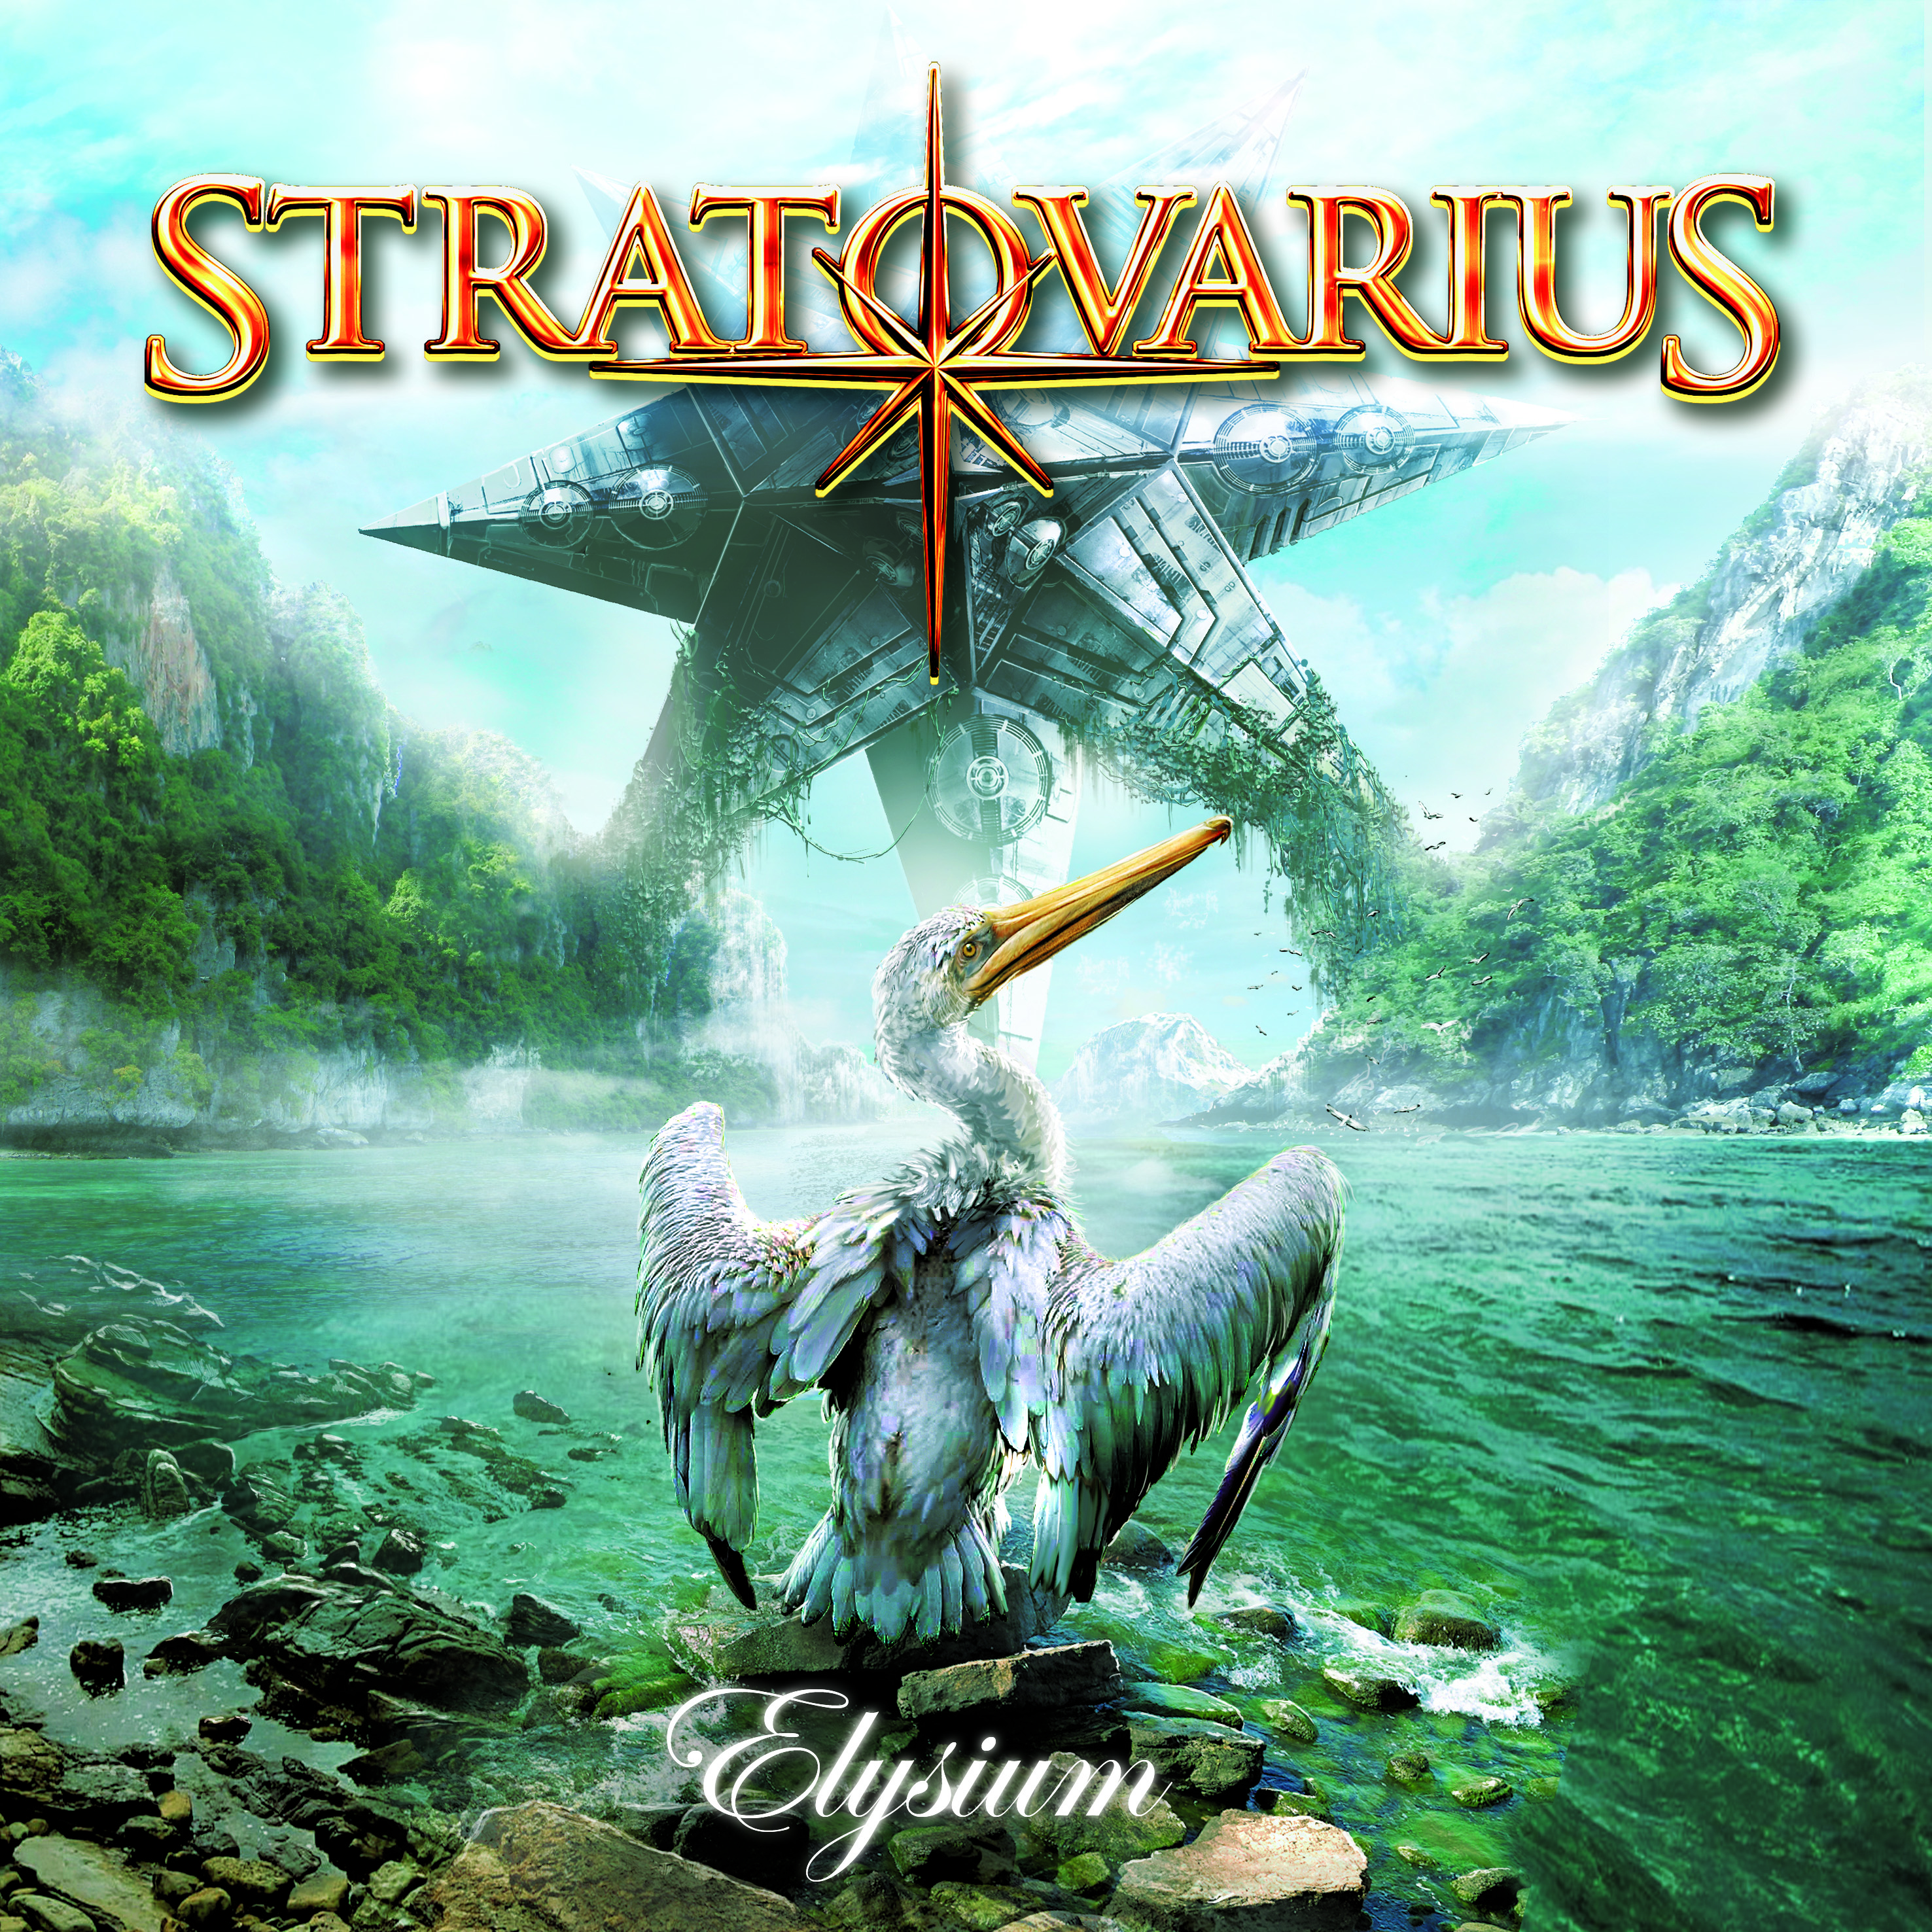 Stratovarius - Elysium ltd ed - 2xCD